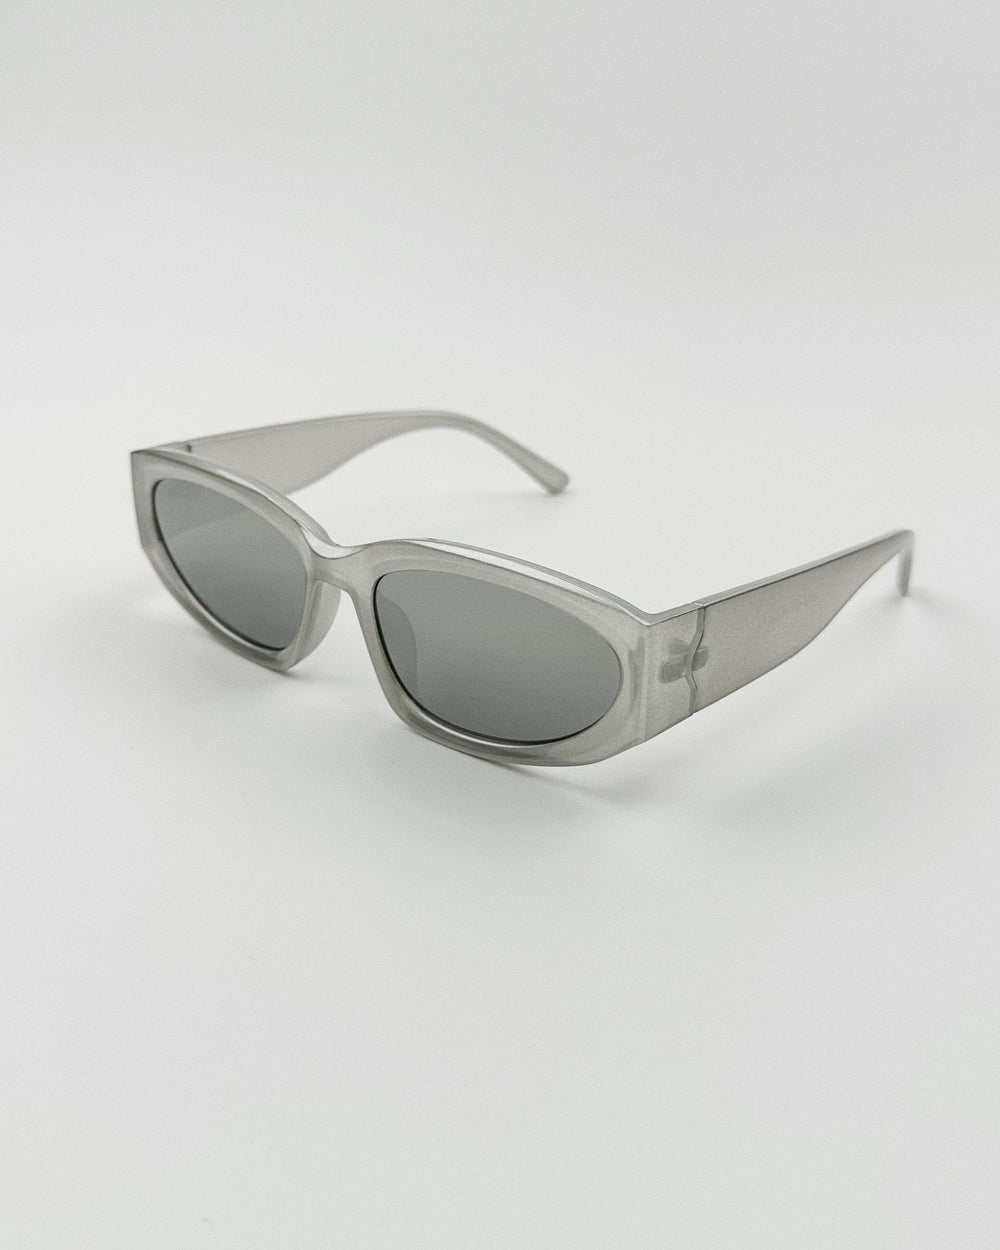 Shop in 404 Yk2 Square Frame Silver Future Style Sunglasses Street Shot Concave Shape Ins Internet Celebrity Same Style Sun Glasses Cool - bertofonsi